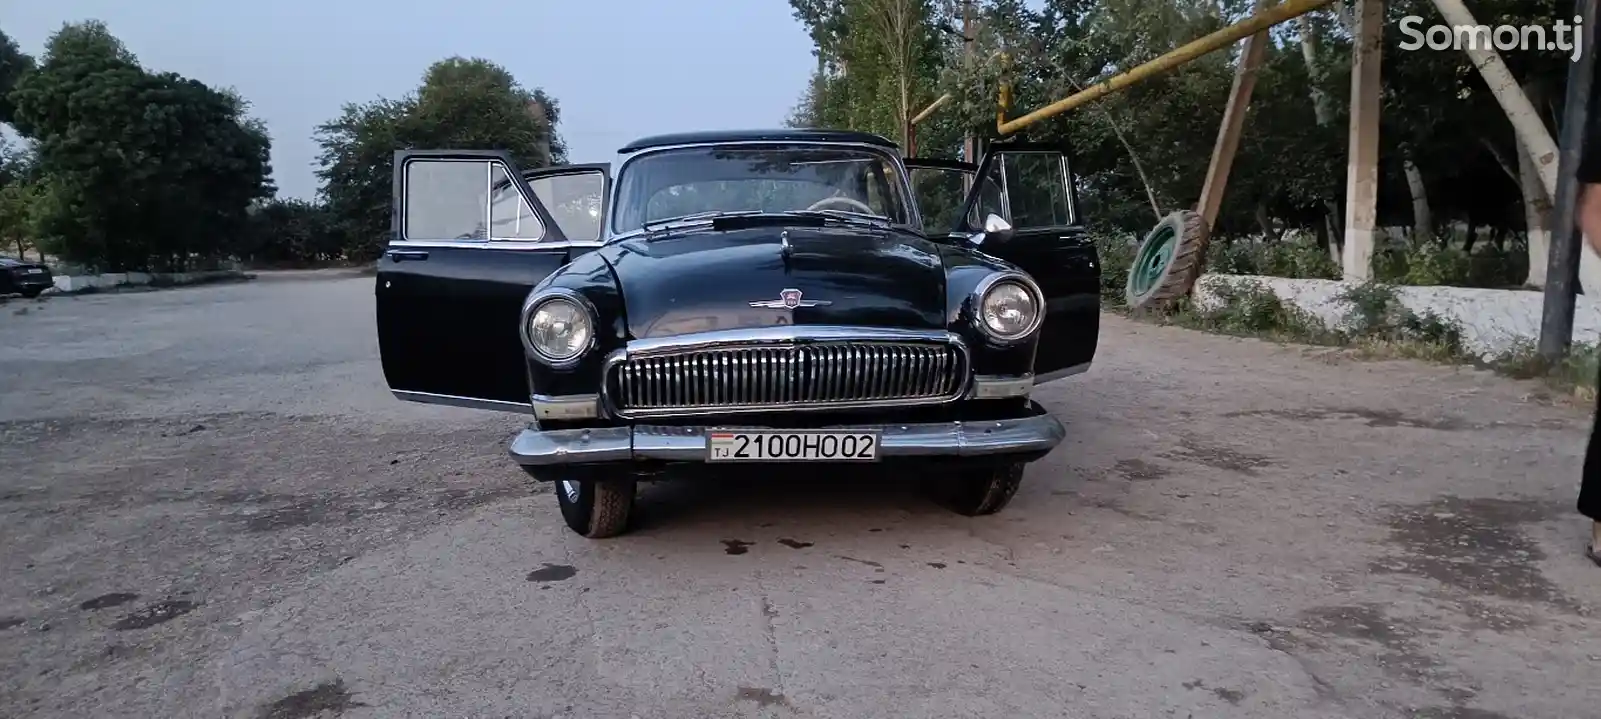 ГАЗ 21, 1963-9